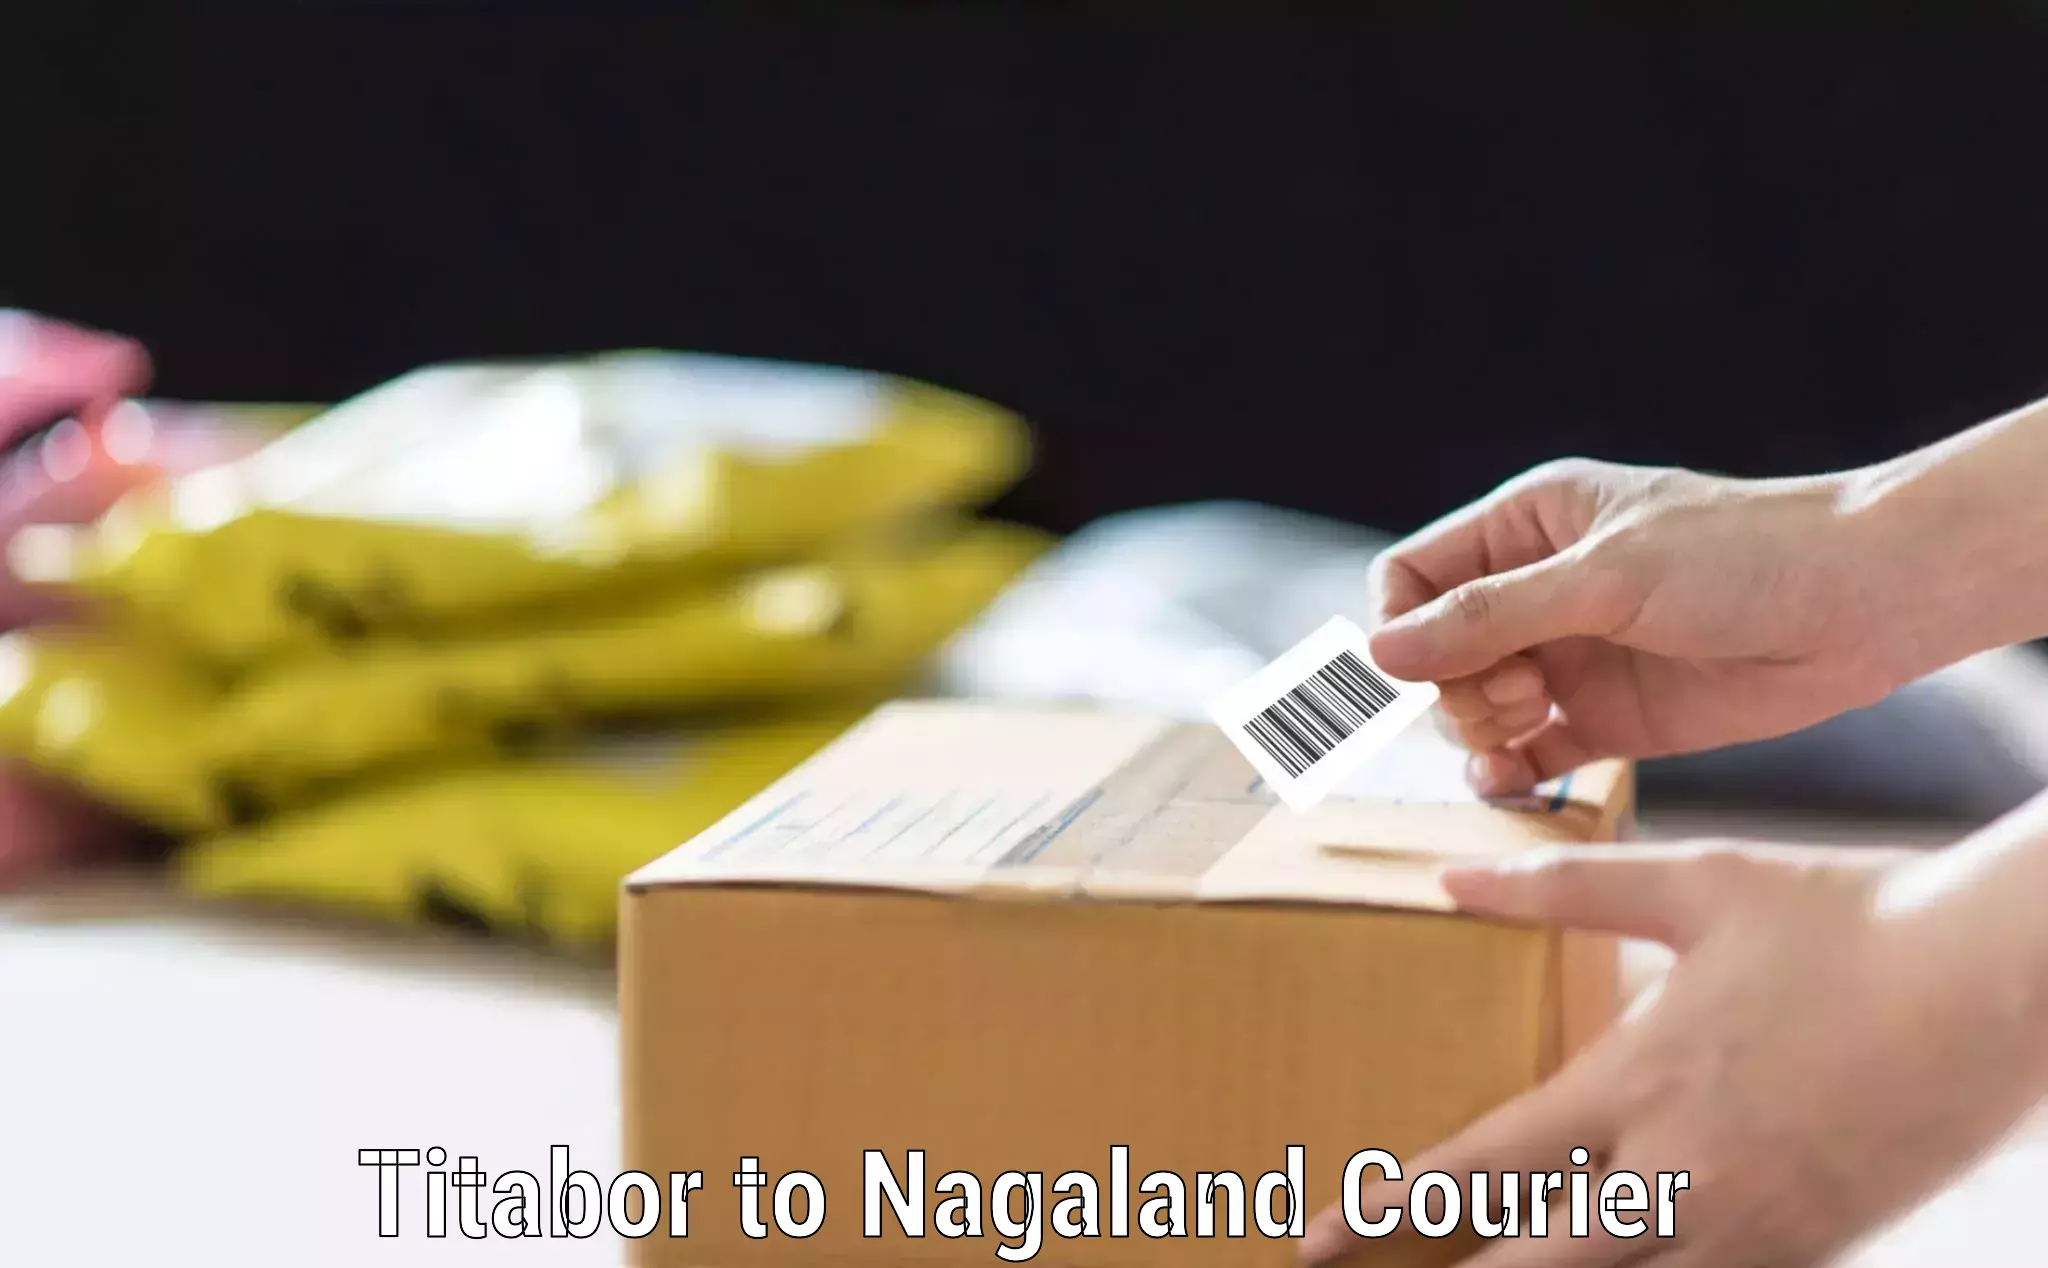 Luggage transport company Titabor to Nagaland